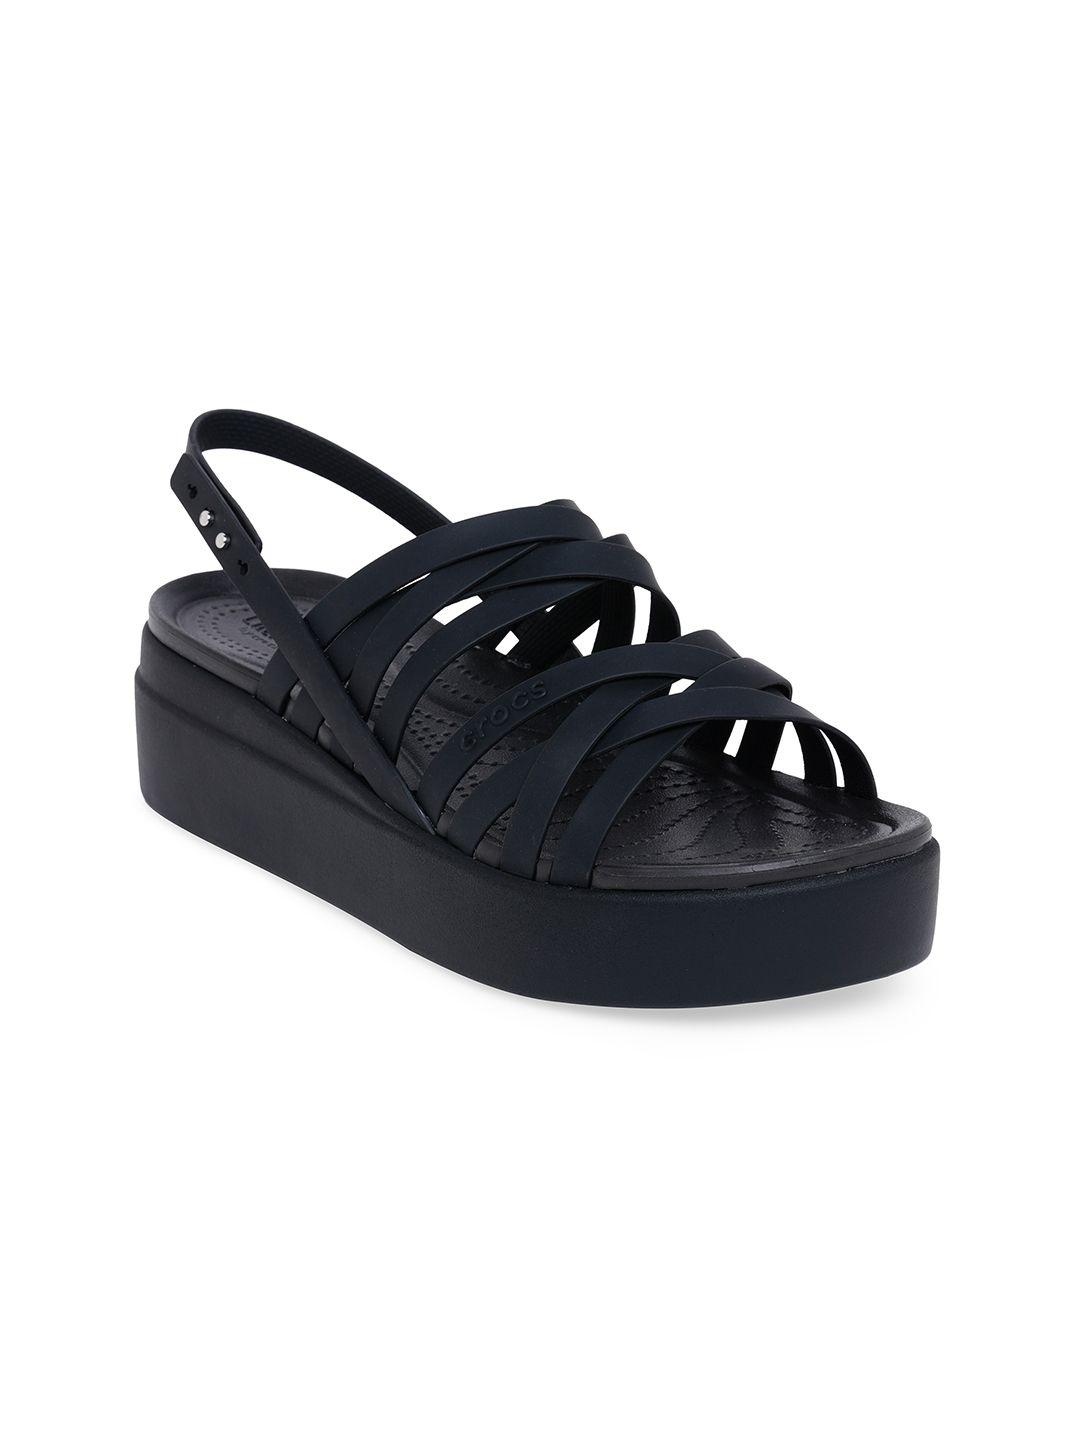 crocs-brooklyn-black-flatform-heels